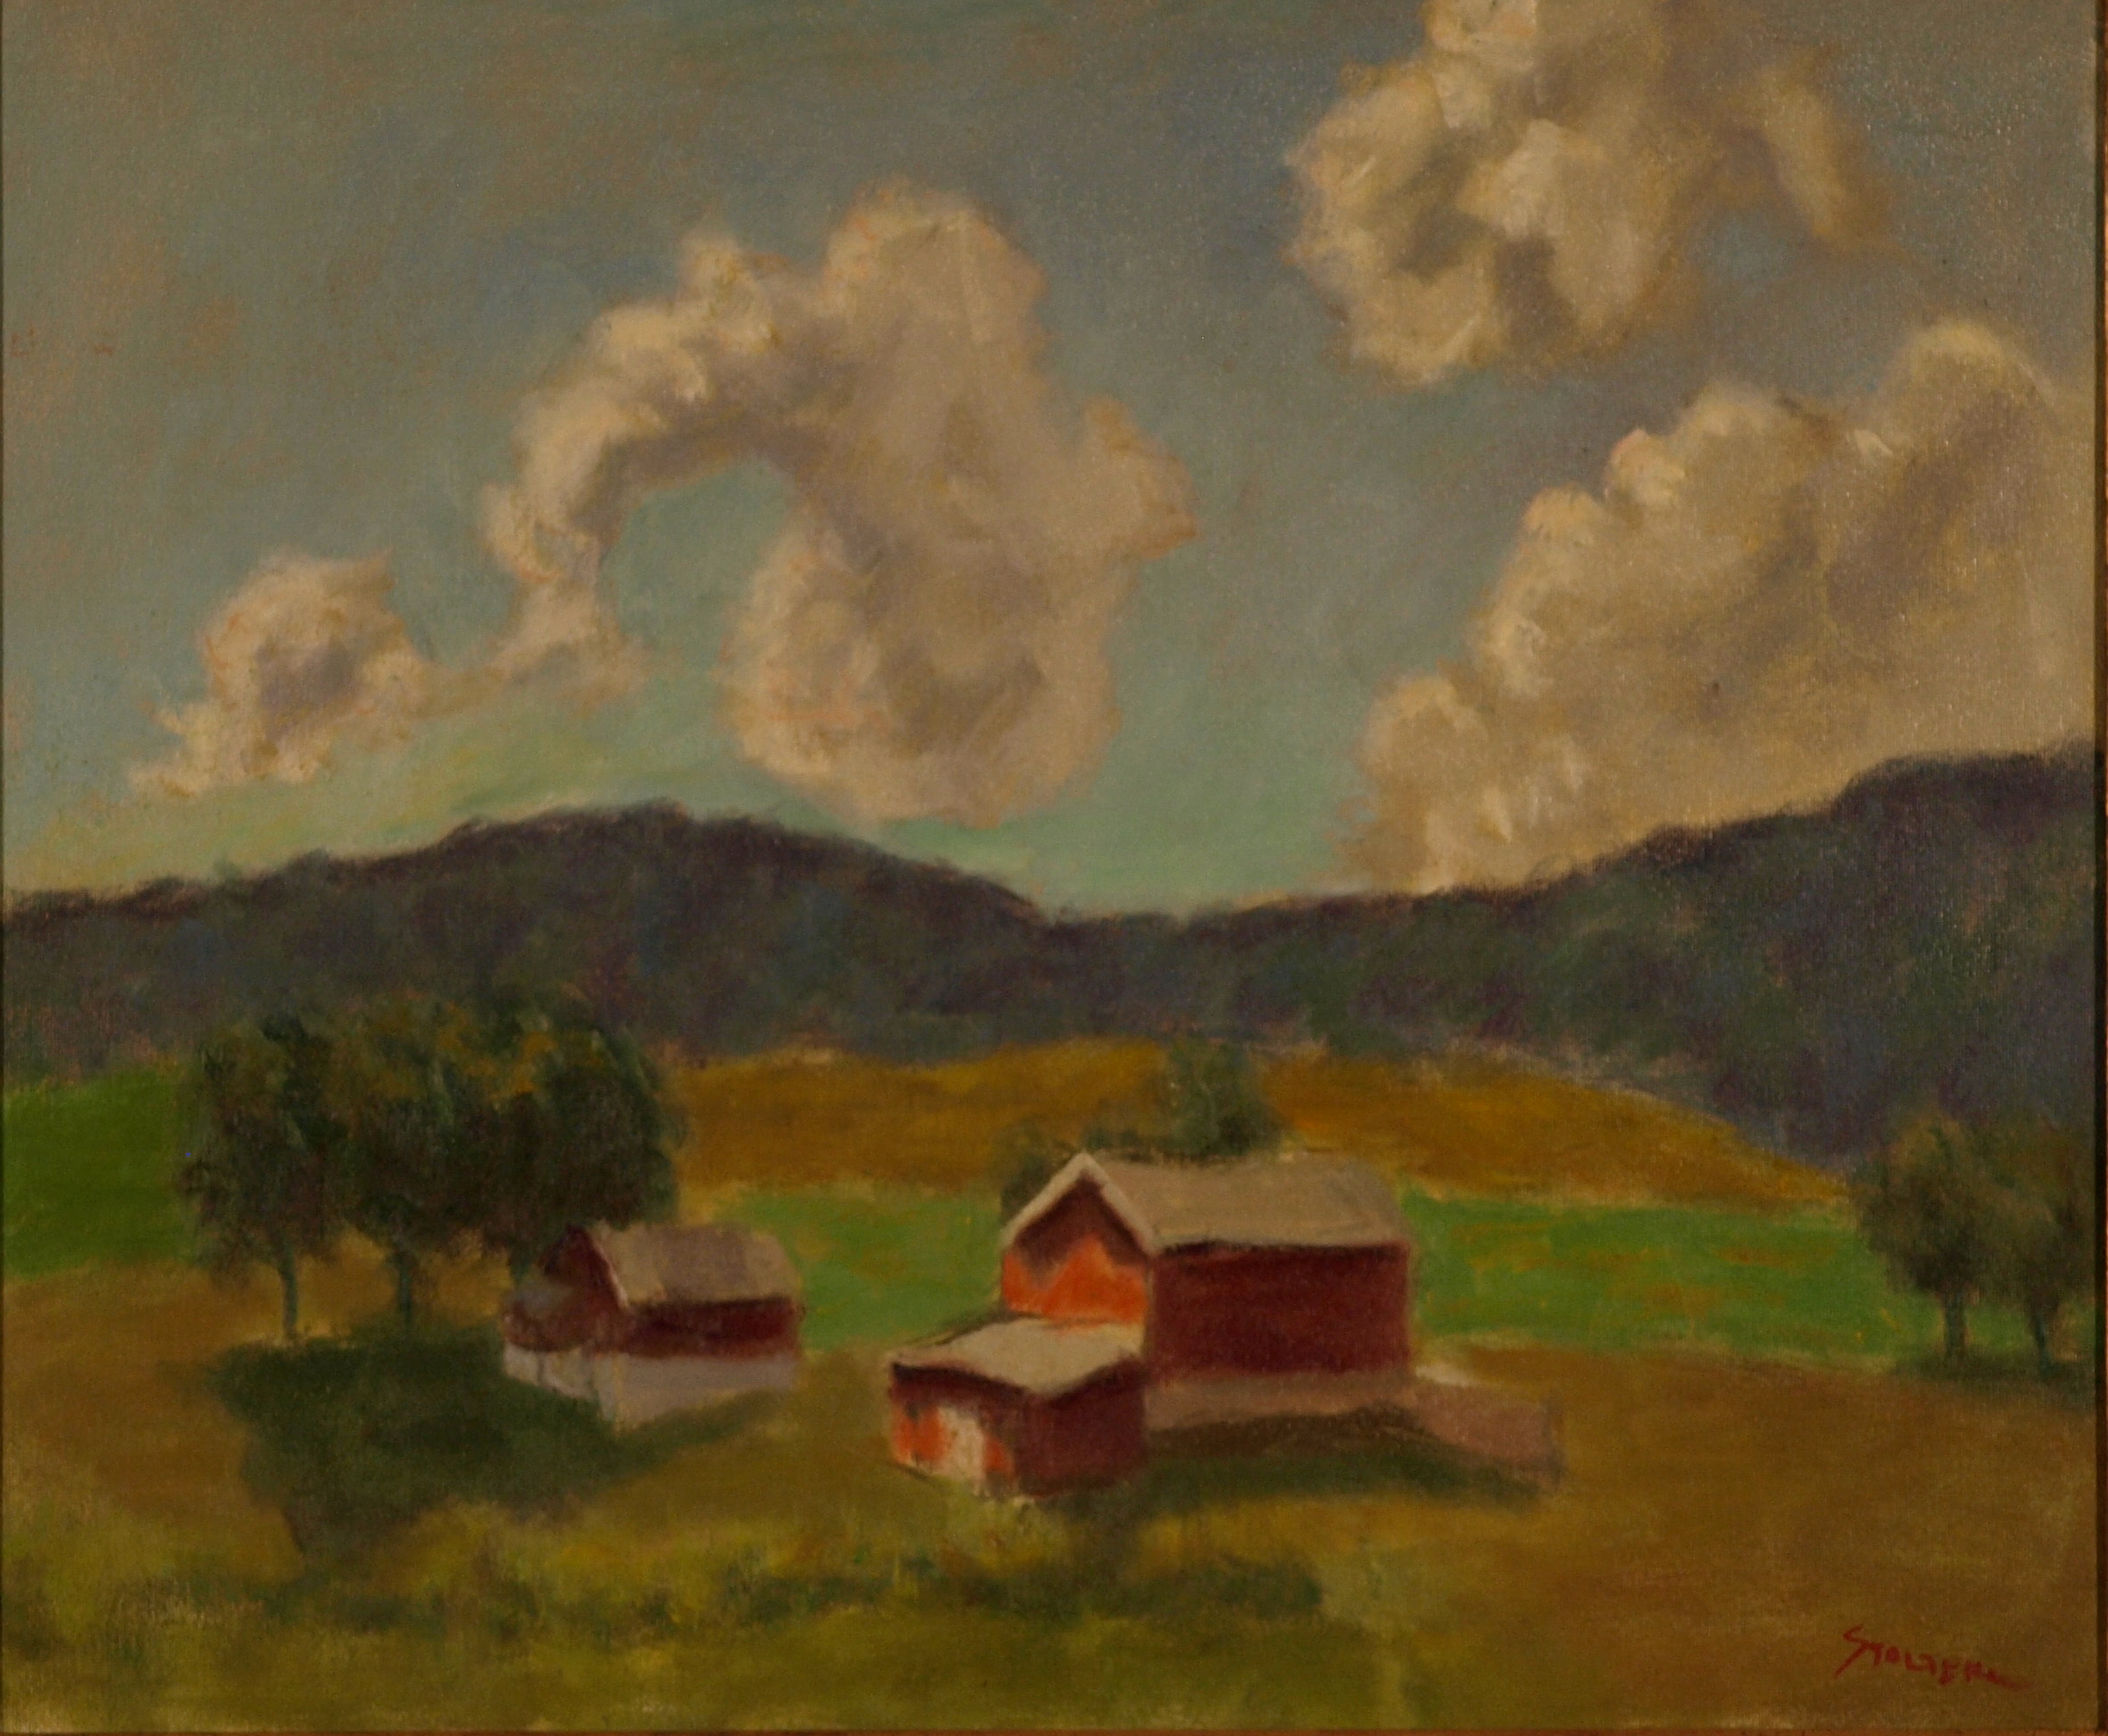 Sunlit Farm Near Amenia, Oil on Canvas, 20 x 24 Inches, by Richard Stalter, $650